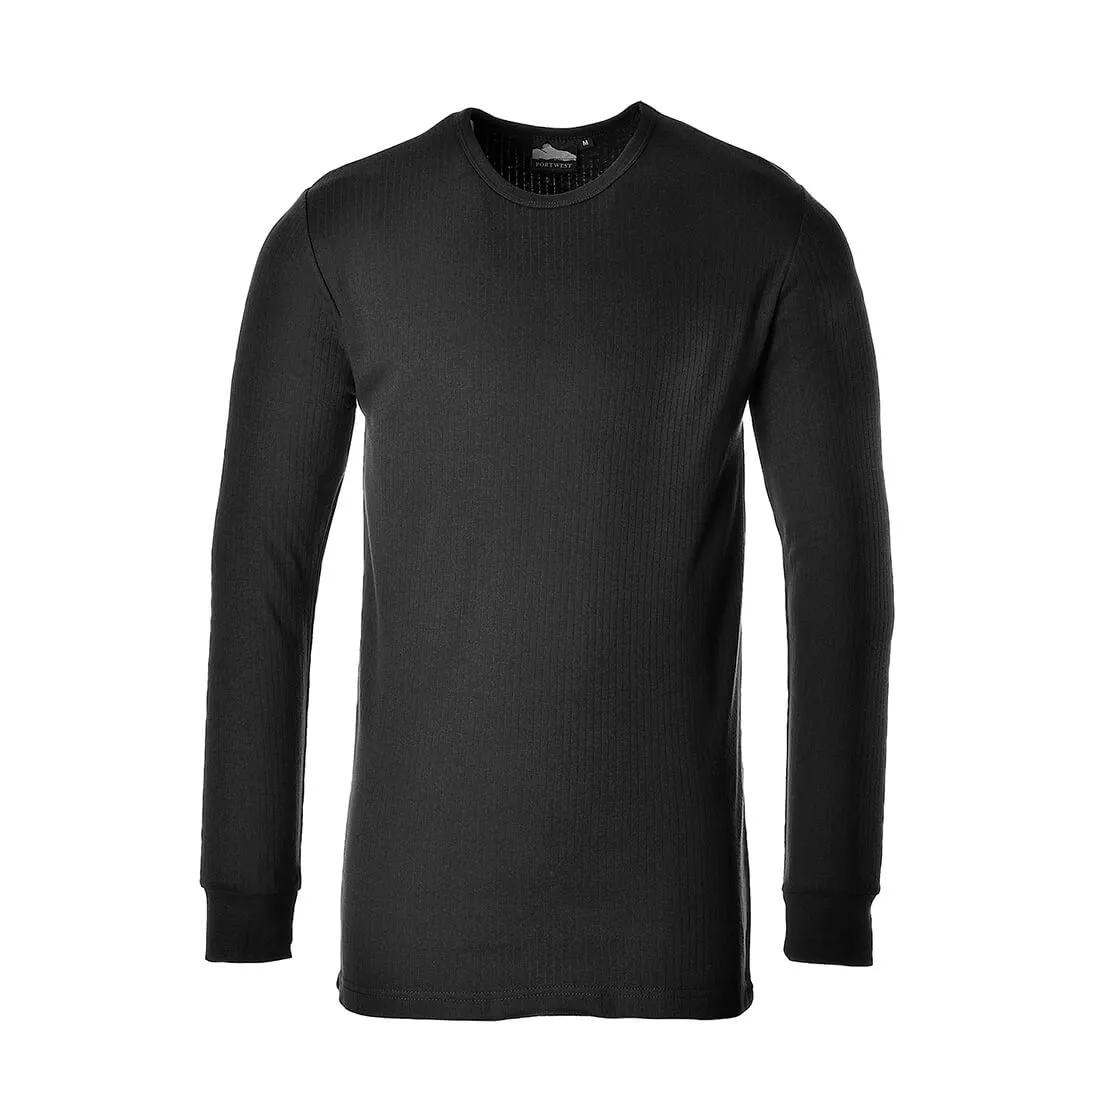 Portwest Thermal Long Sleeve T Shirt - Black, 3XL